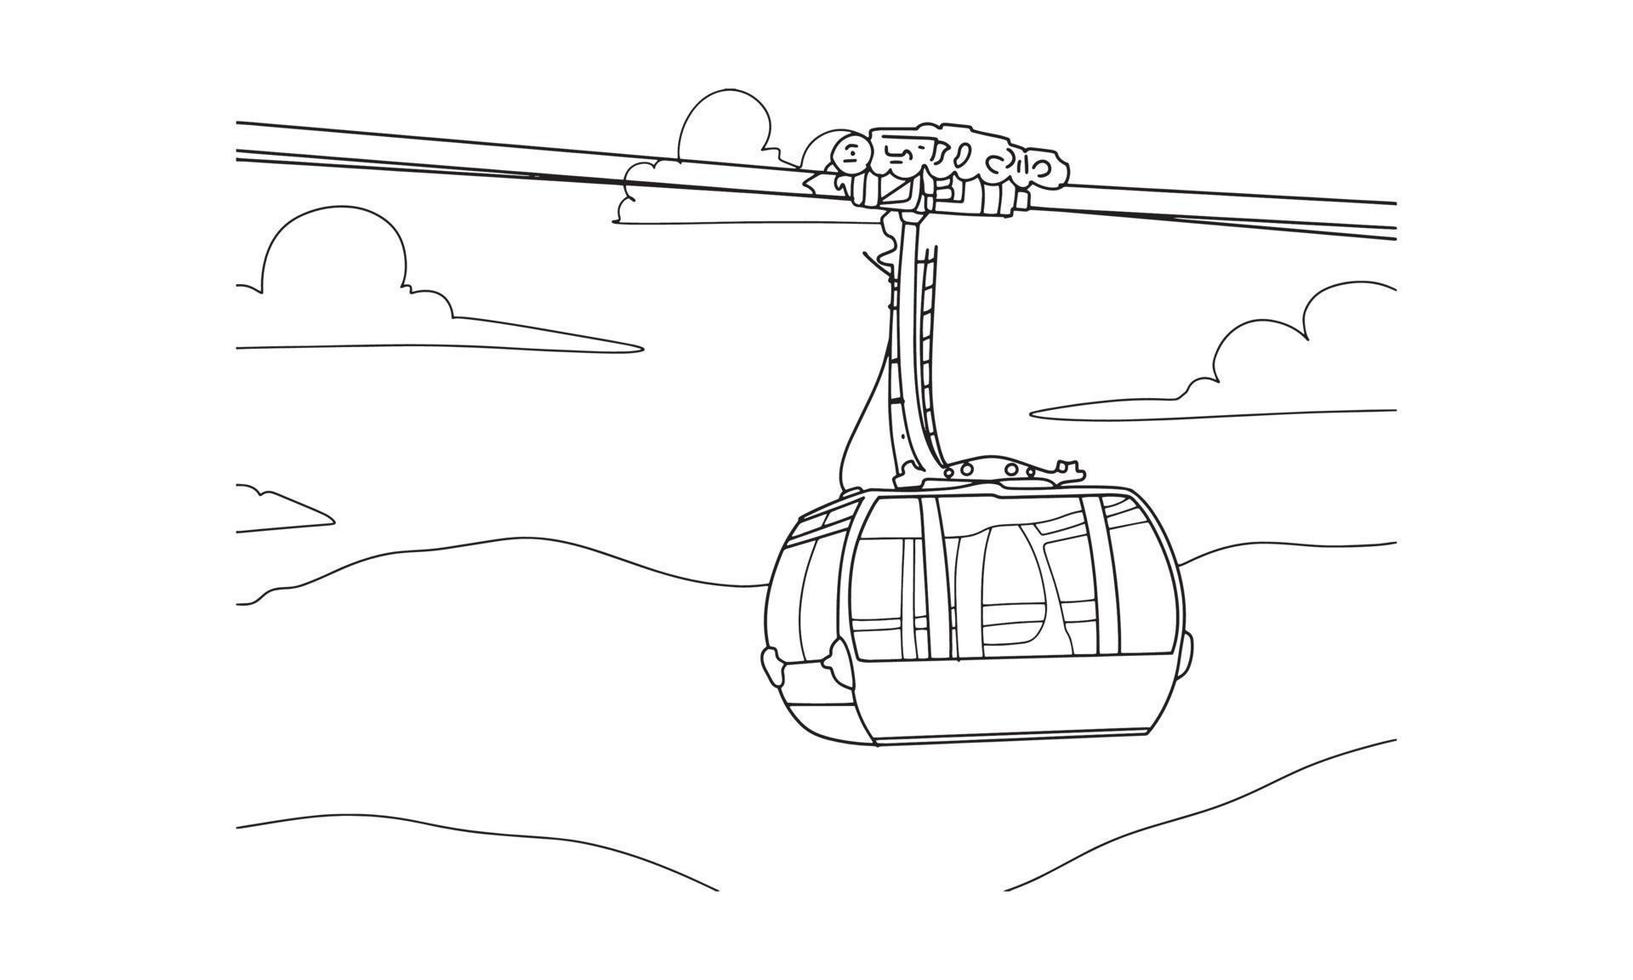 Cable car line art sketch illustration vector